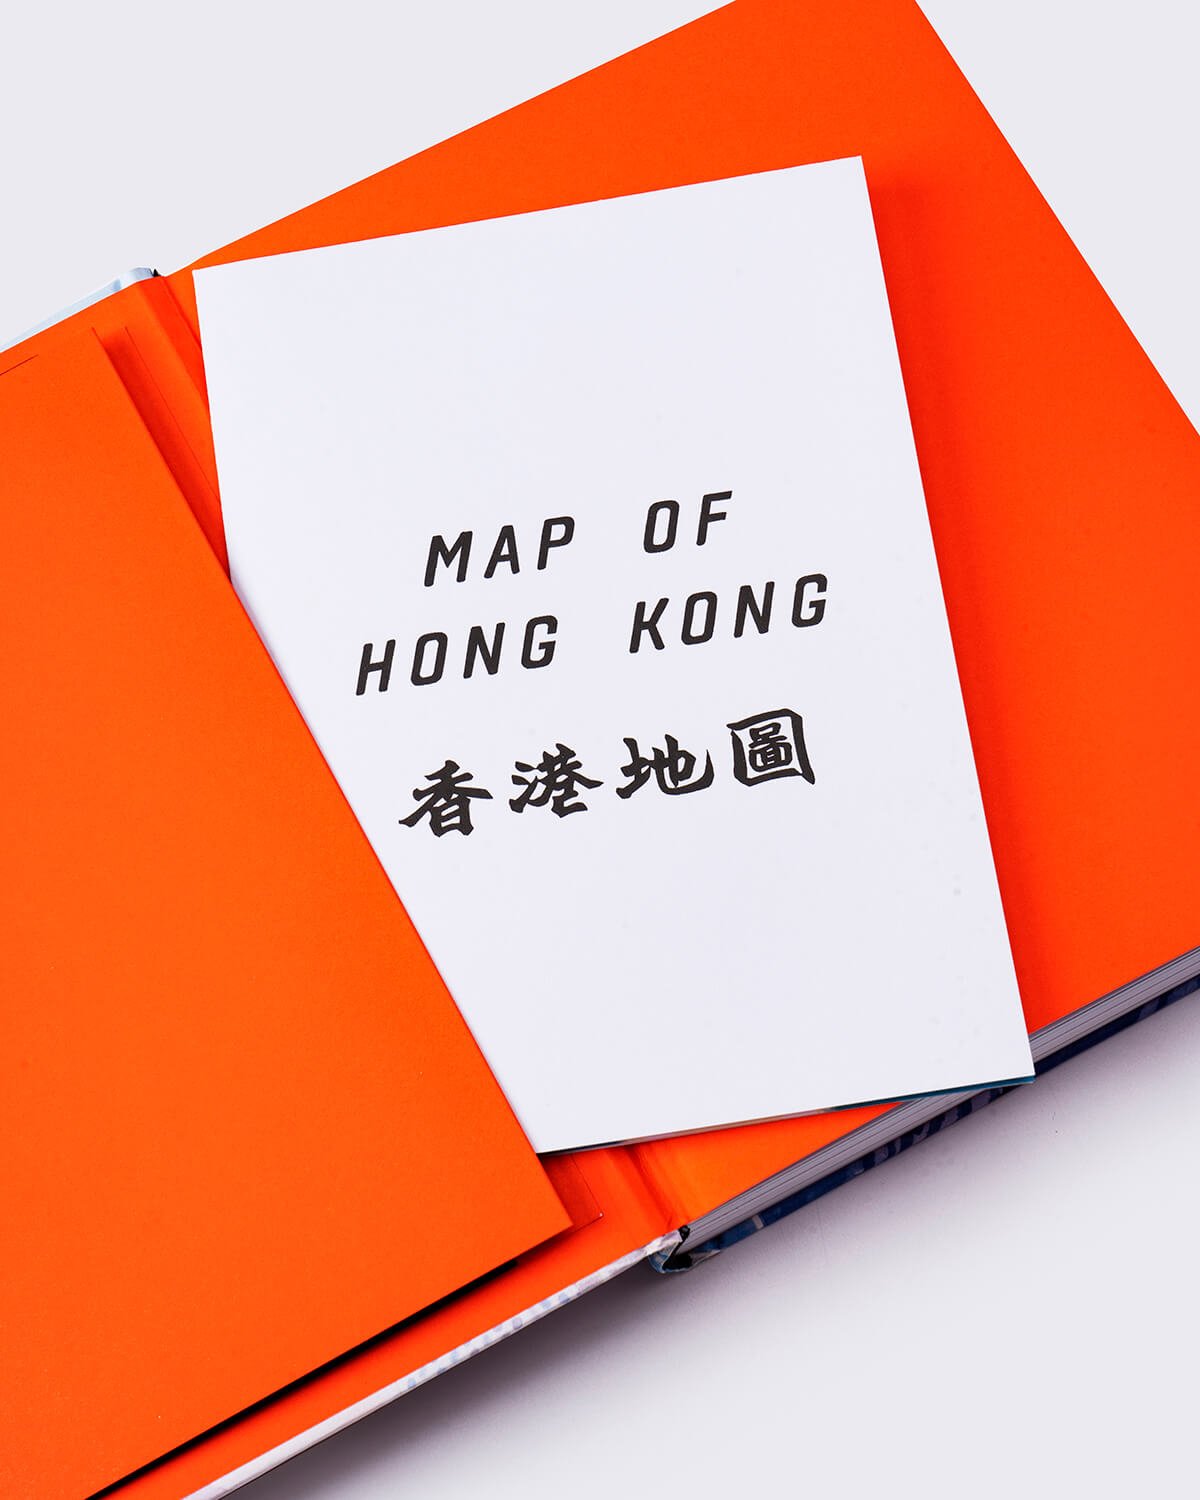 Hong Kong Visual Culture: The M+ Guide